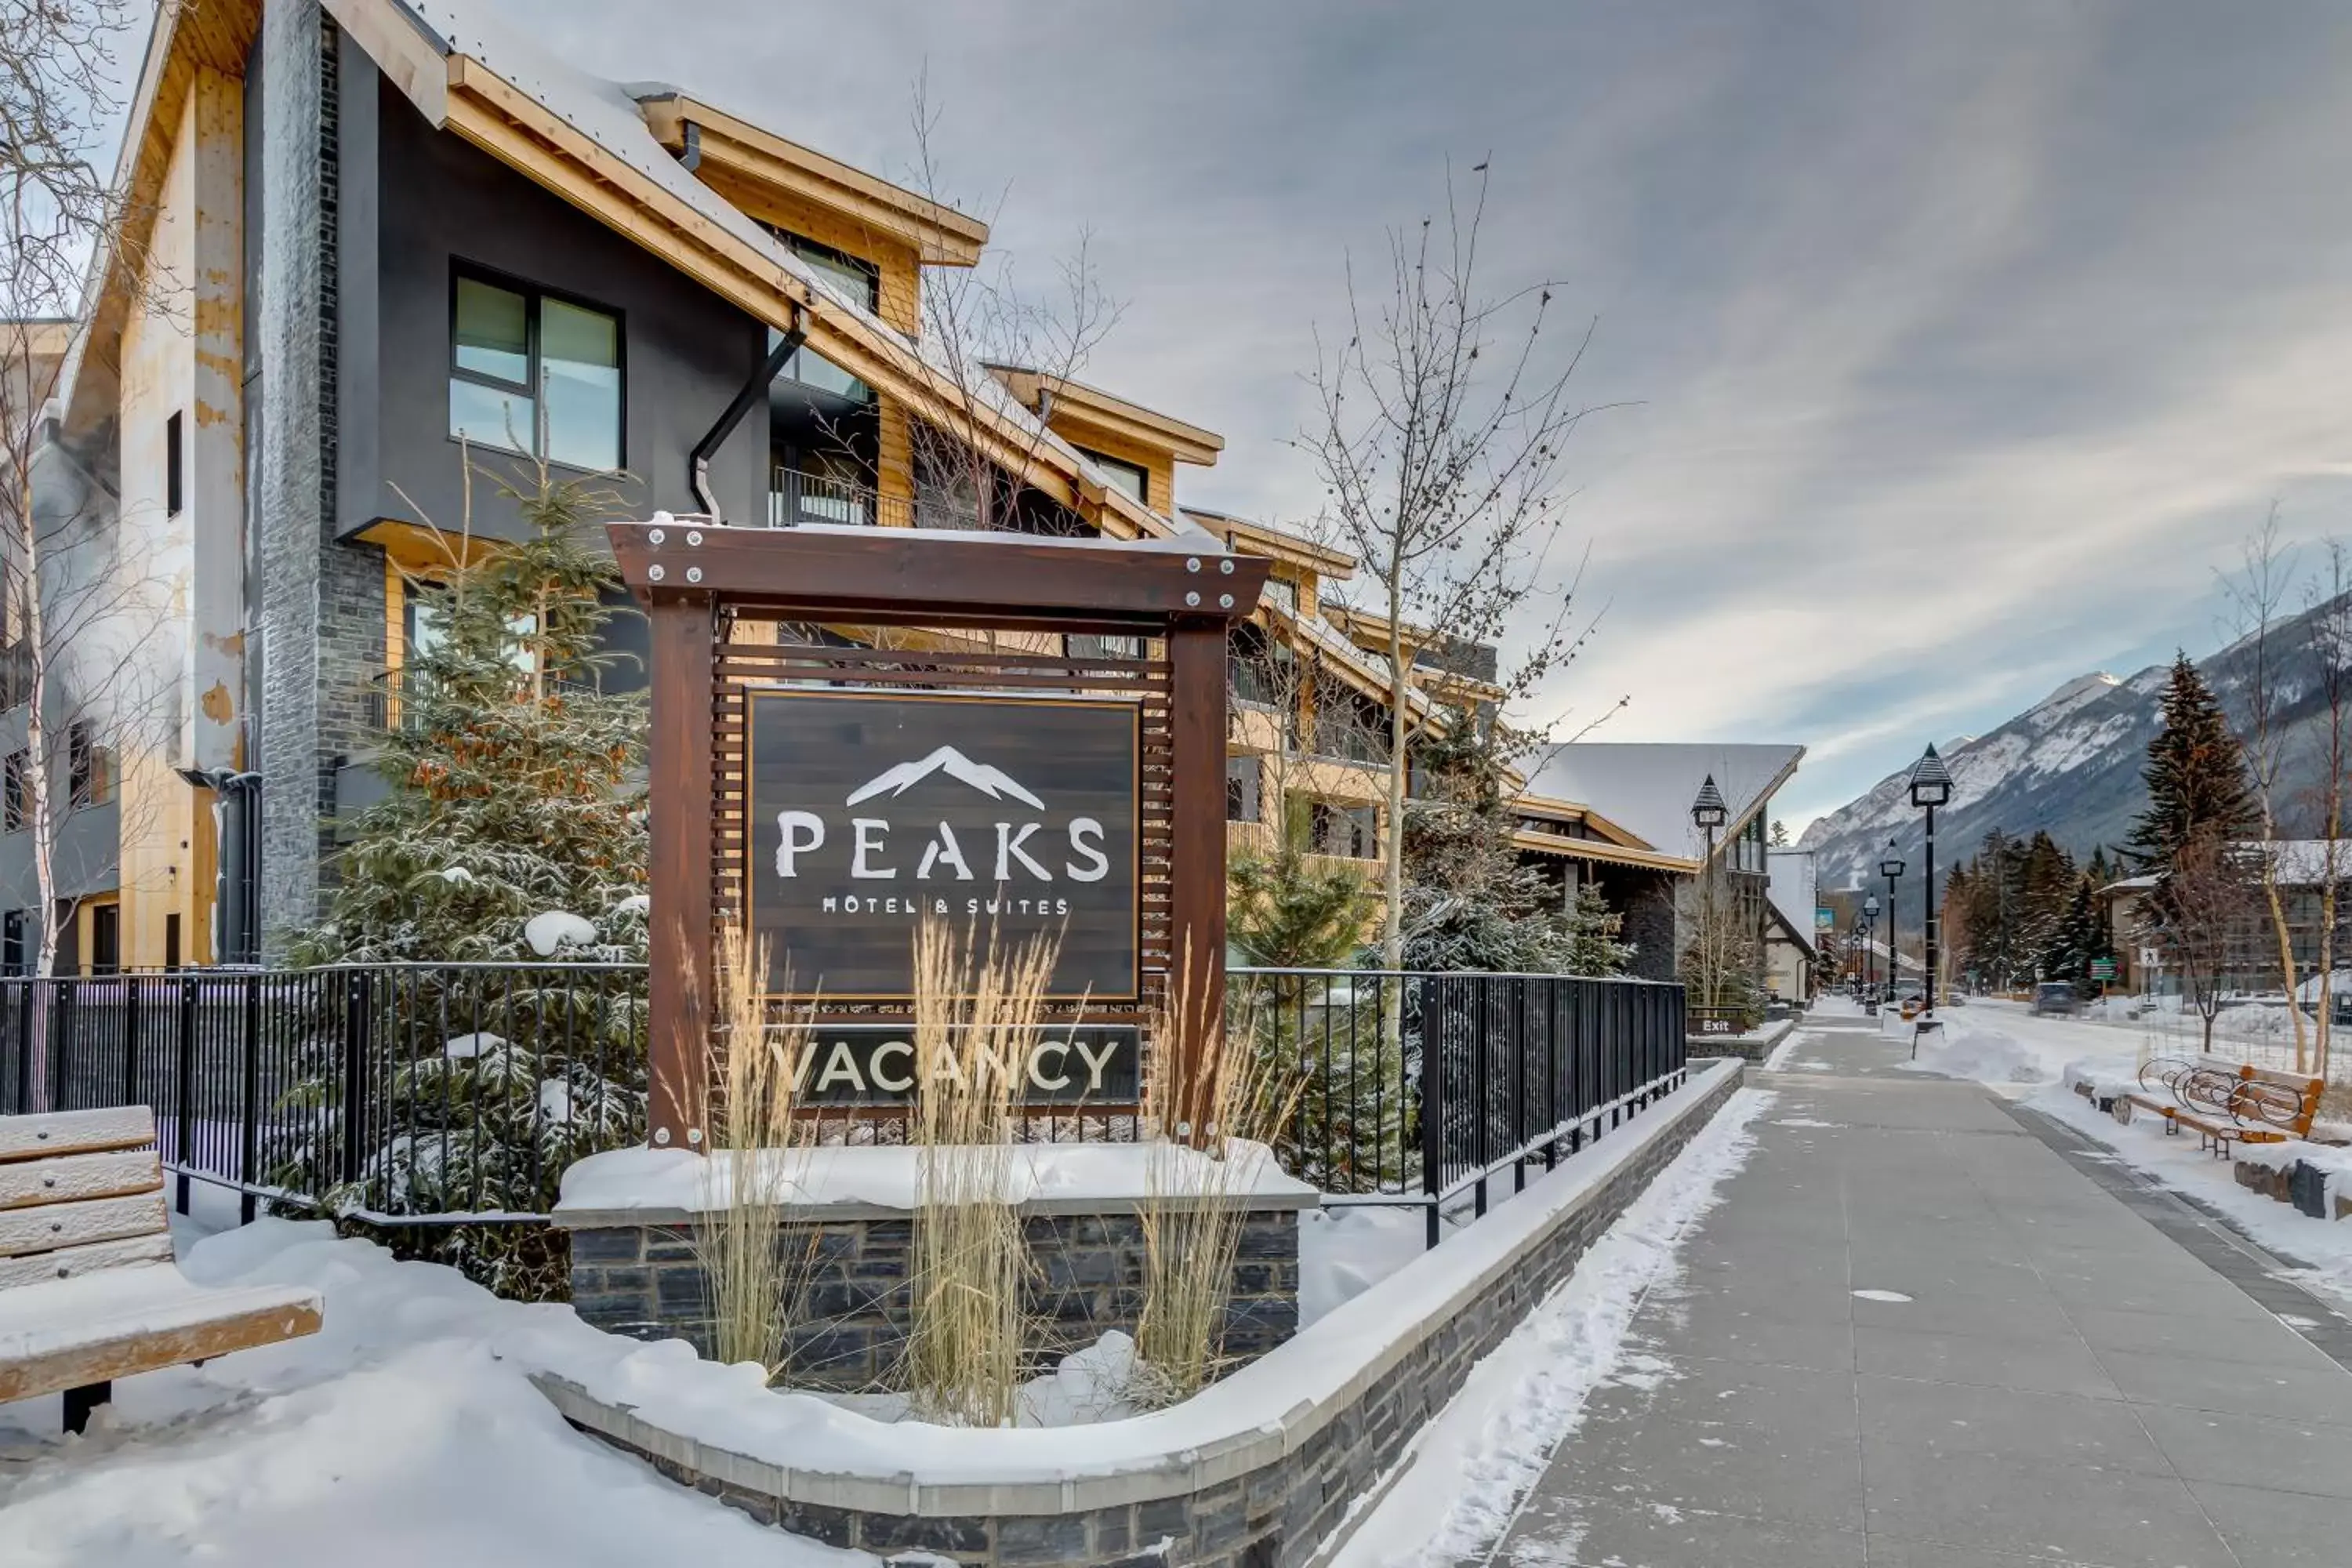 Winter in Peaks Hotel and Suites